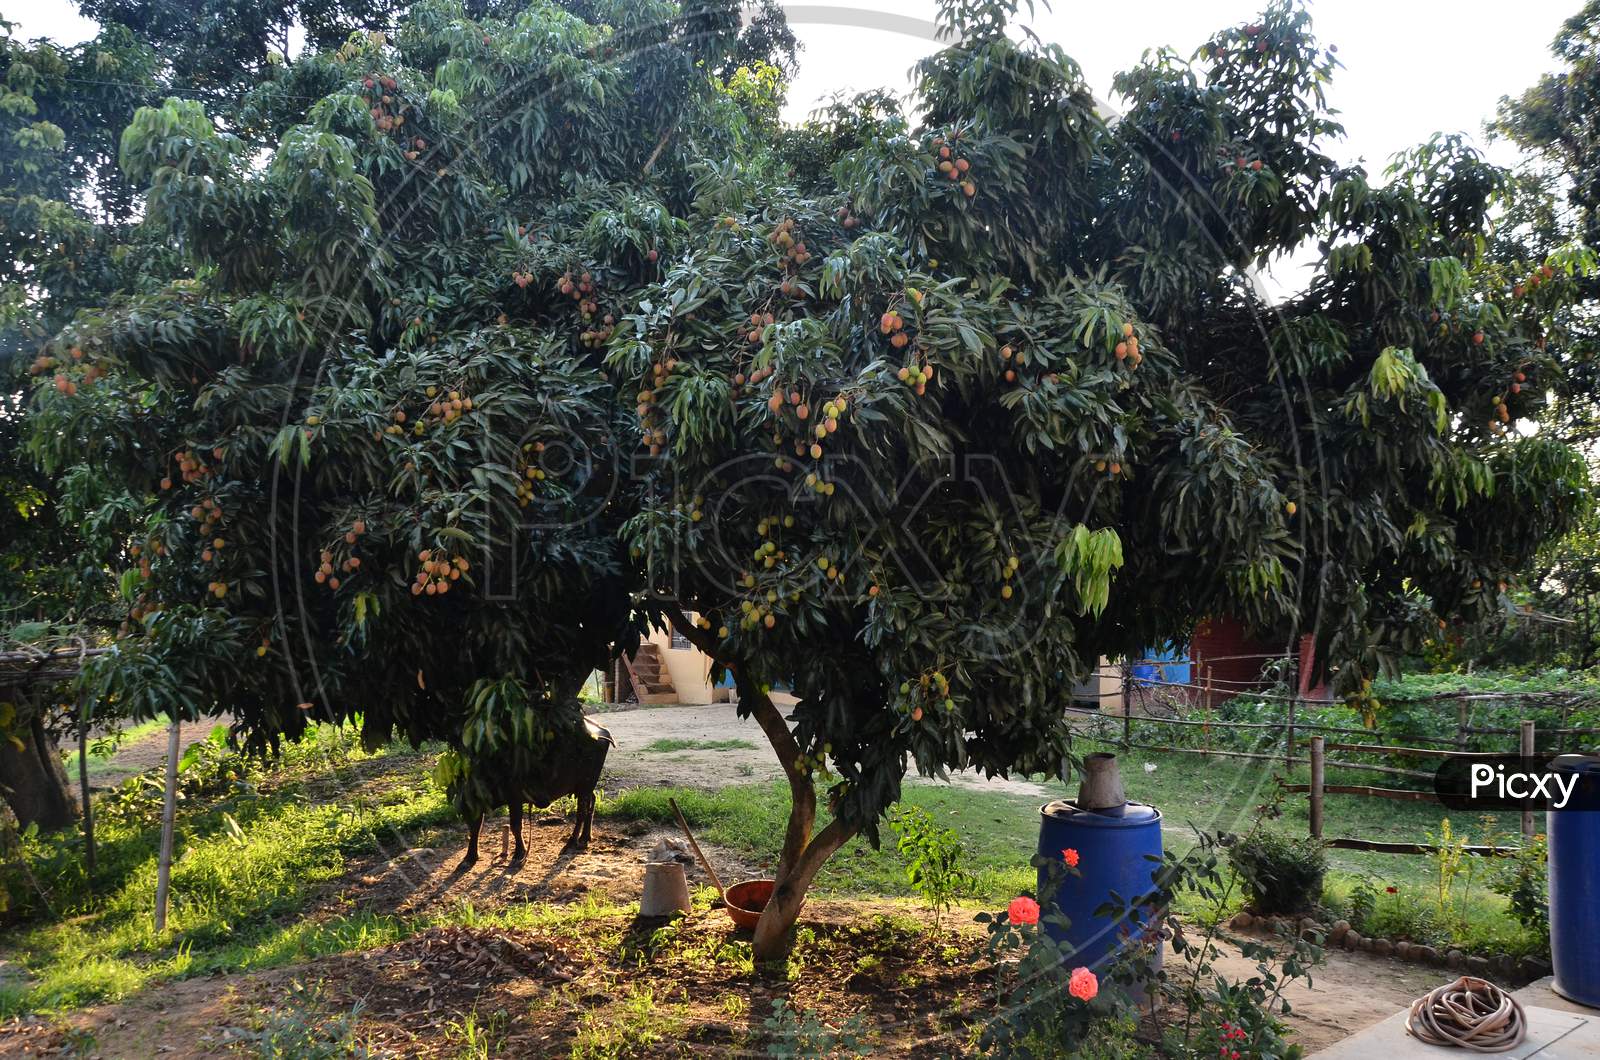 Beautiful Fruits tree in the home Himachal Pradas,India